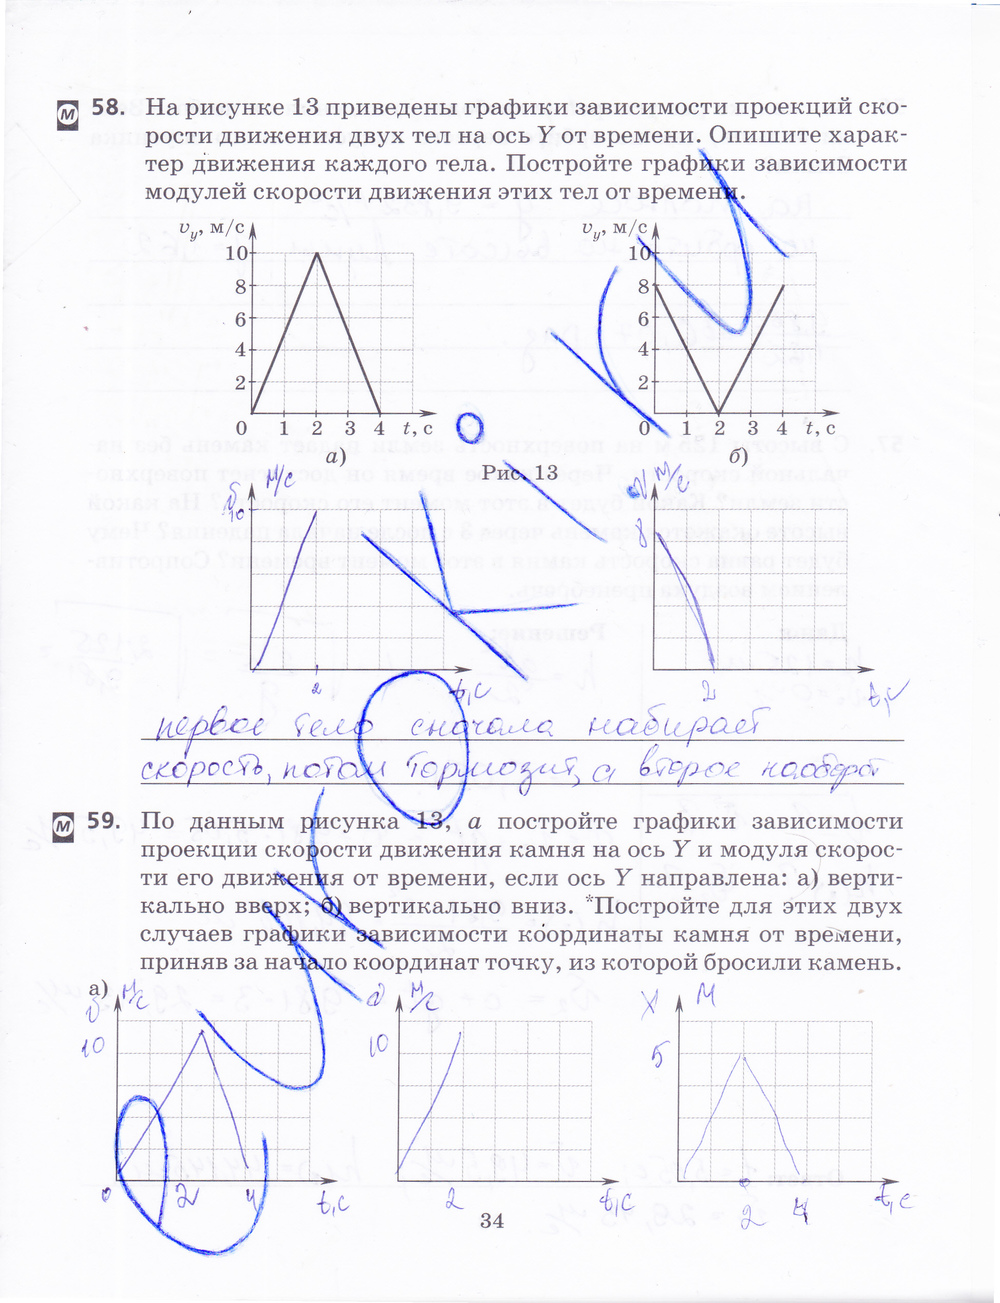 ГДЗ Физика Пурышева 9 класс Рабочая тетрадь Номер стр. 34